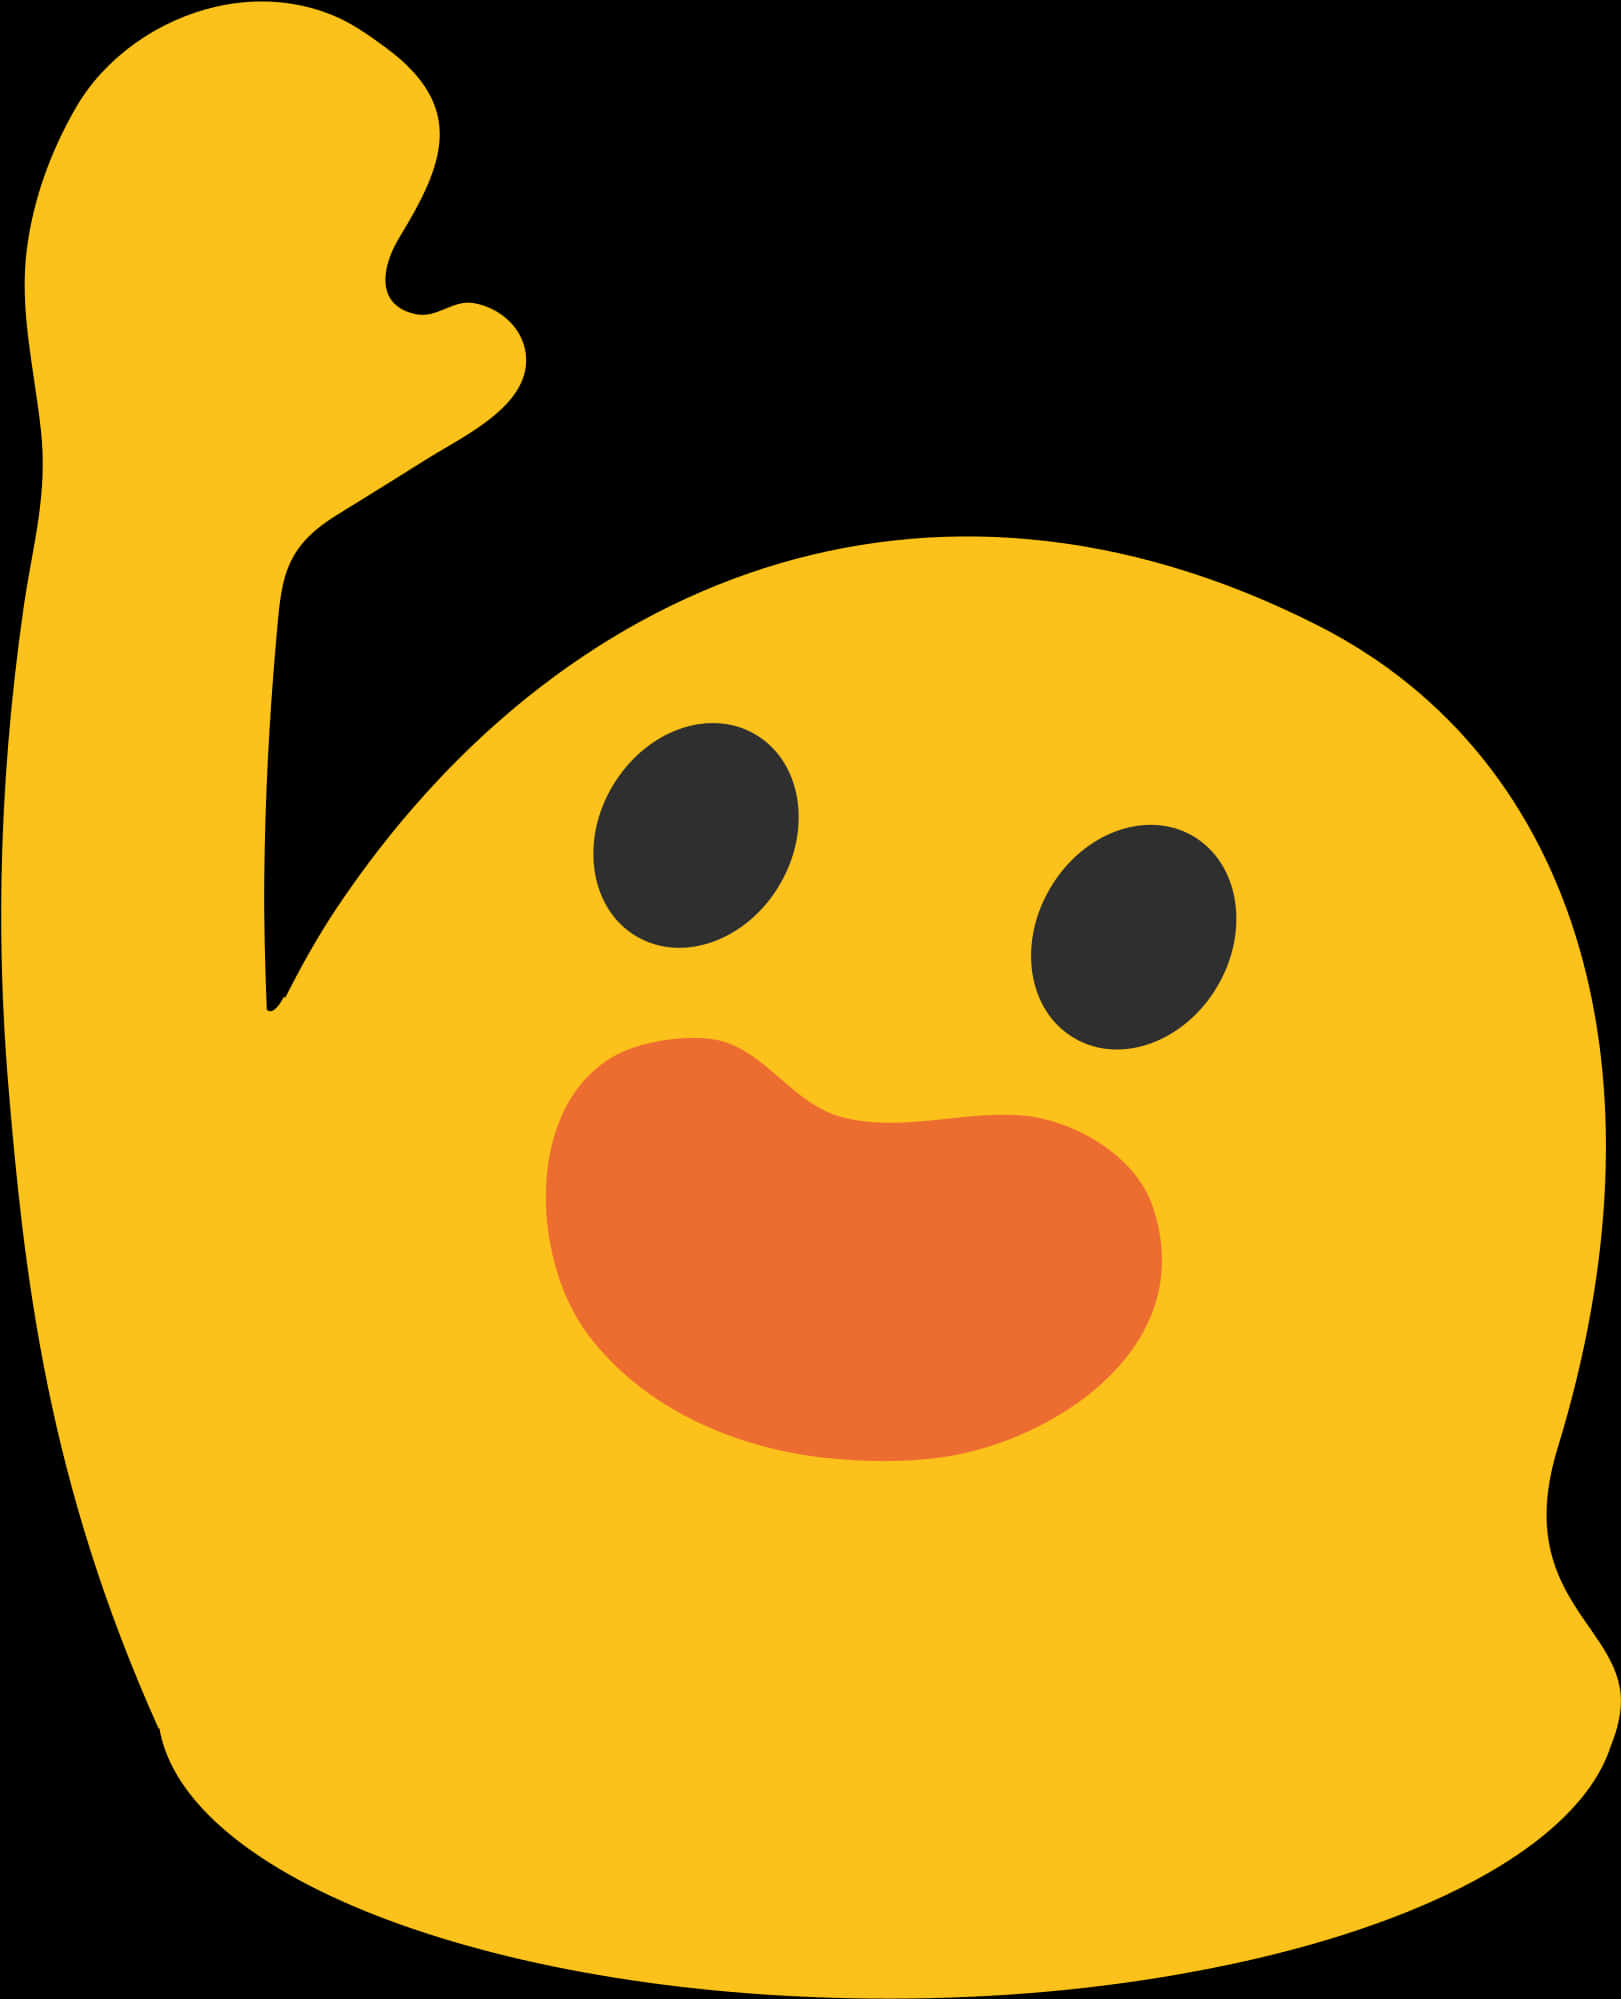 Yellow Heart Emoji Love Gesture PNG image